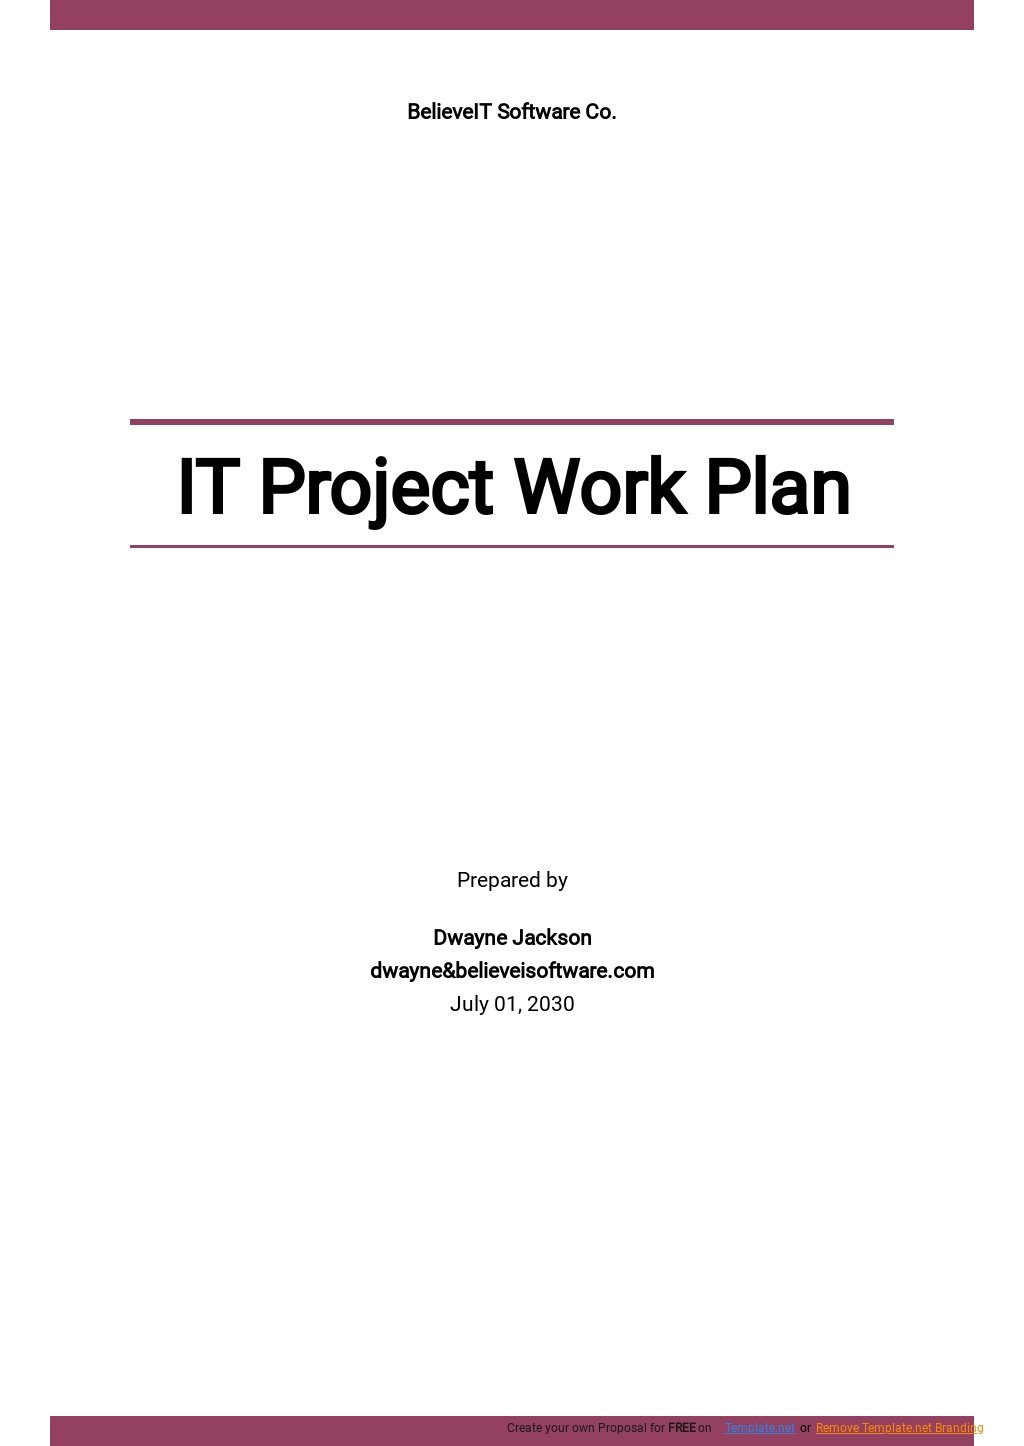 ITProject Work Plan Template.jpe